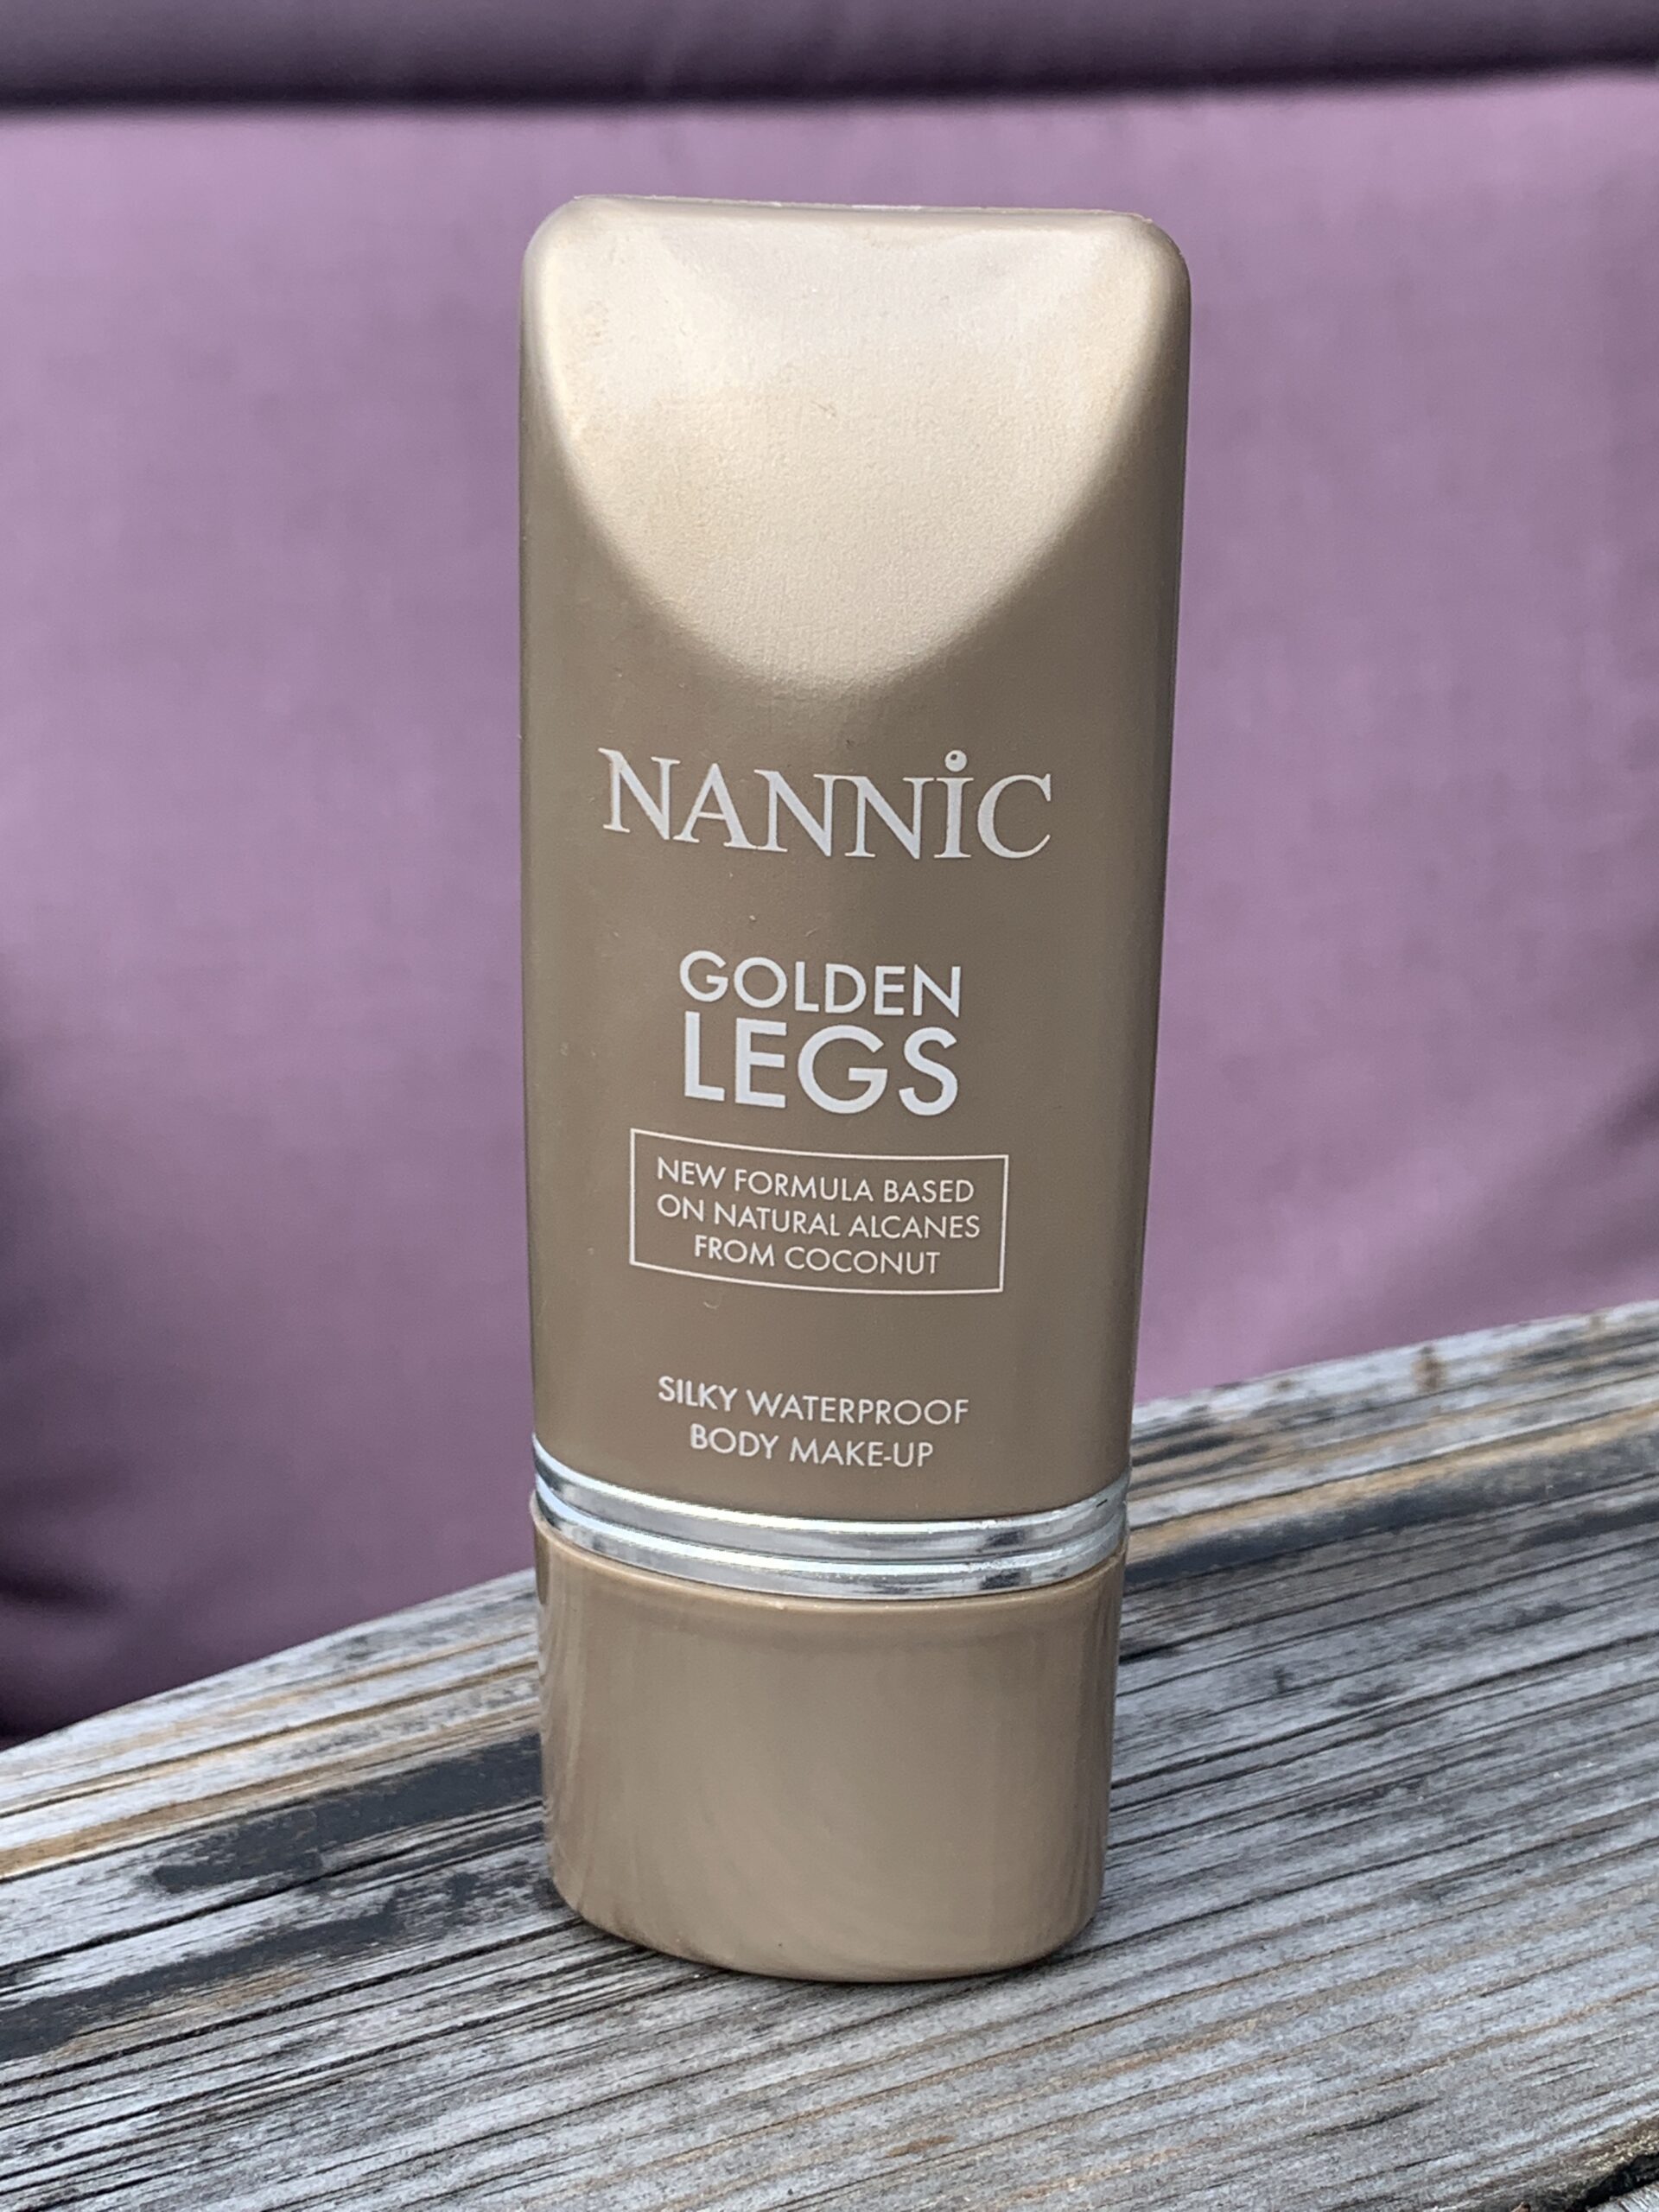 Nannic Golden legs